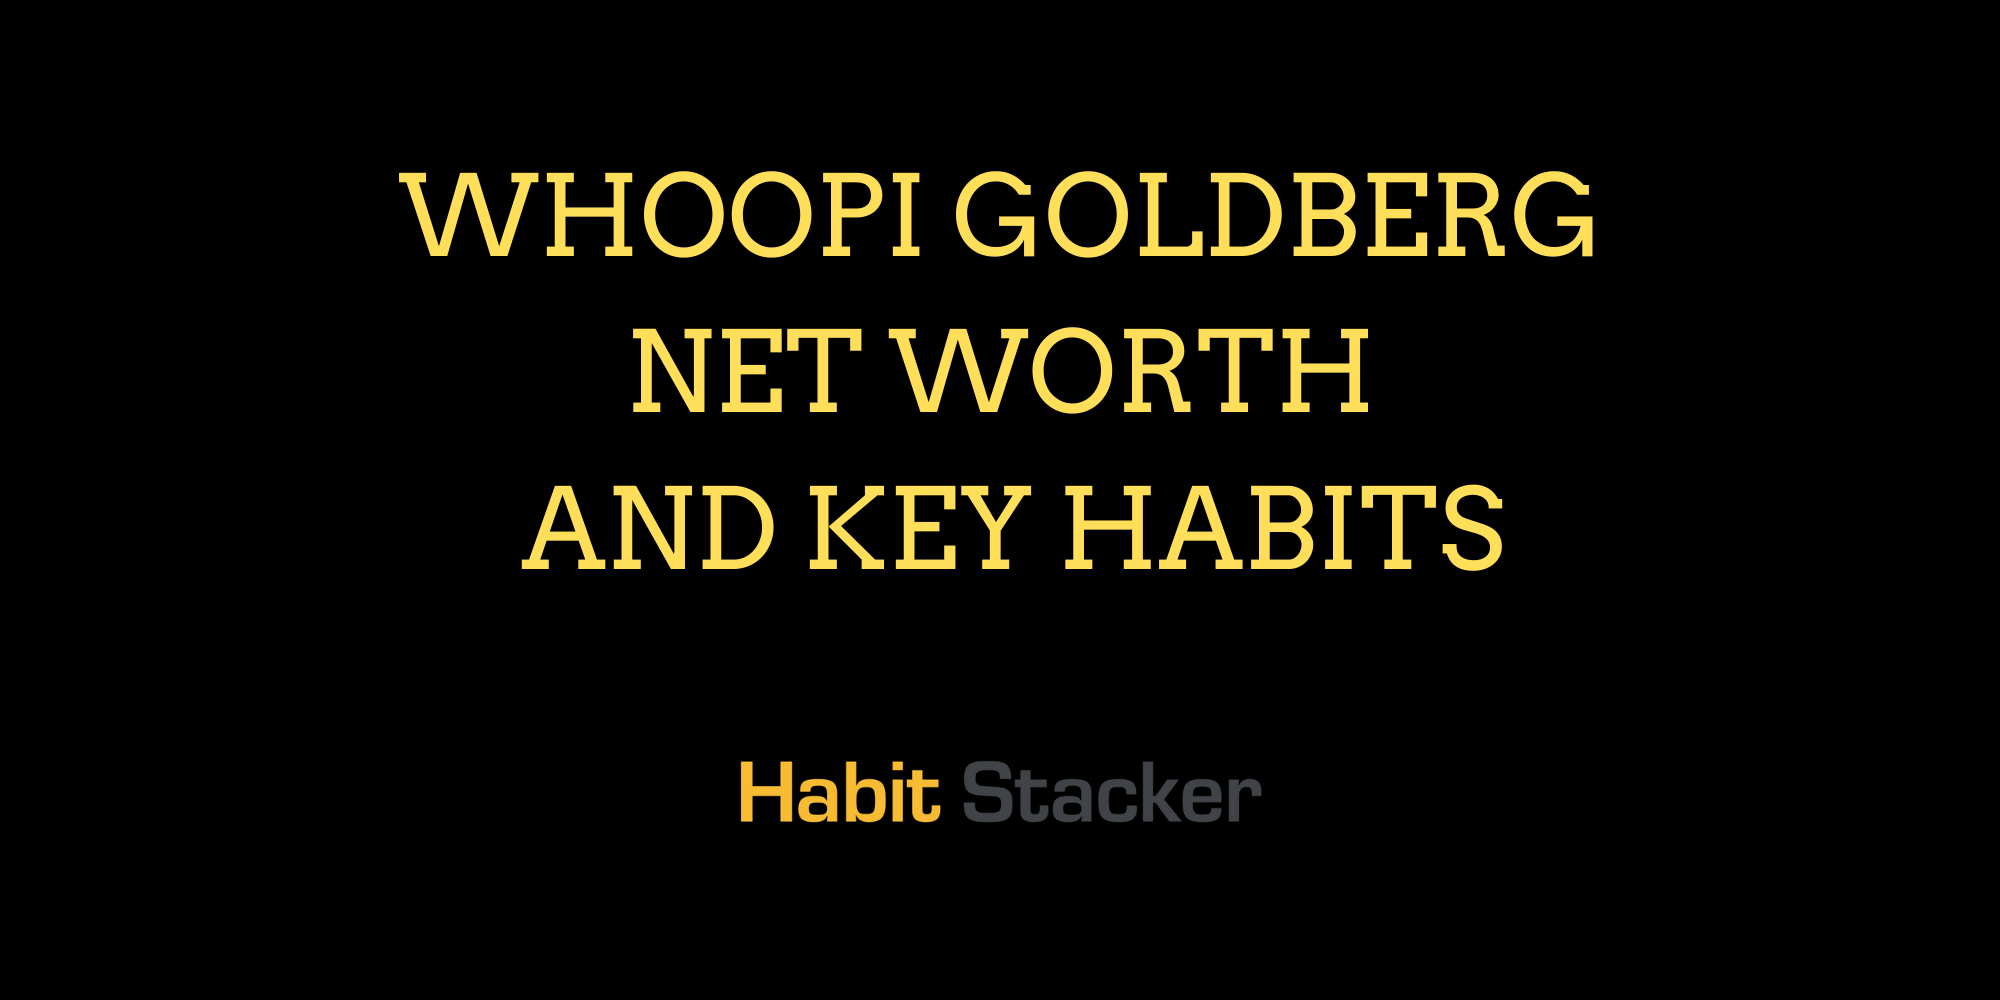 Whoopi Goldberg Net Worth and Key Habits